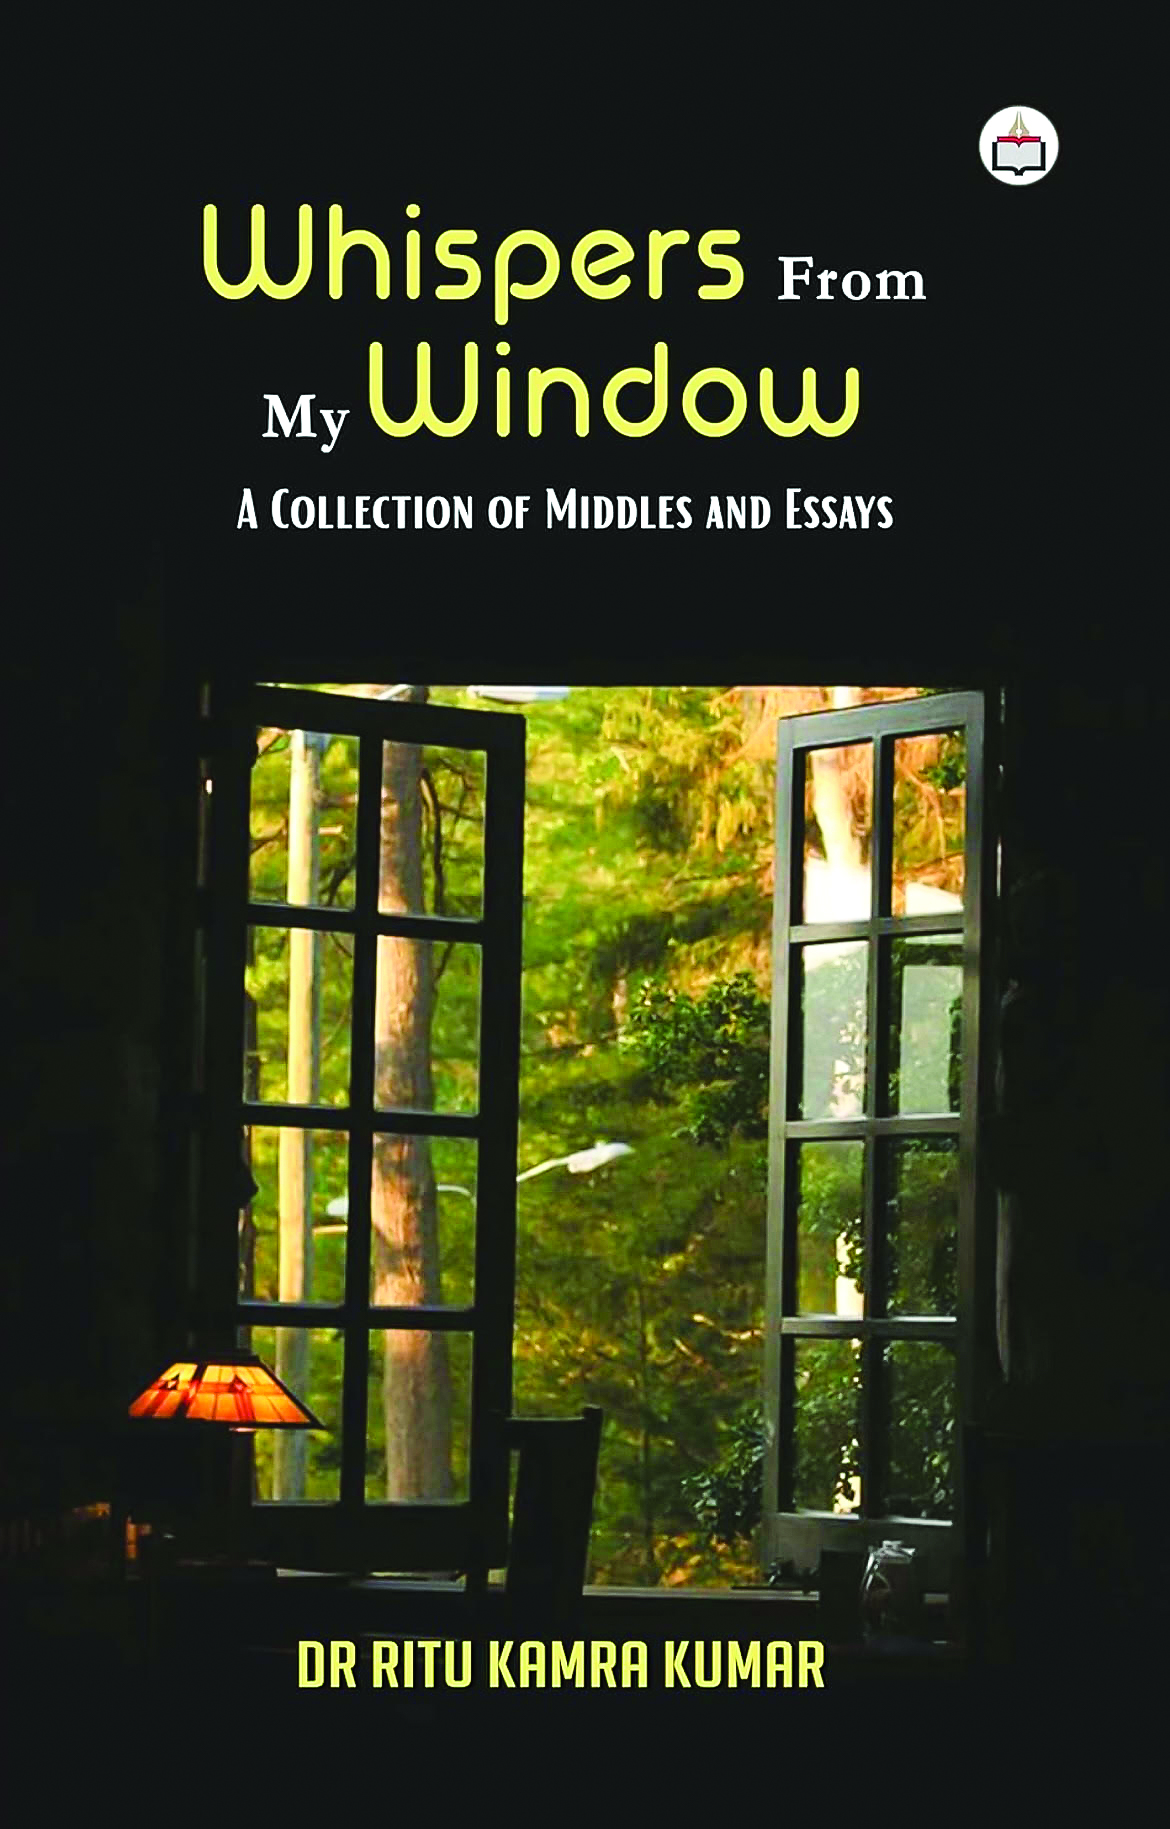 Whispers from My Window: A Glimpse into Dr. Ritu Kamra Kumar’s World